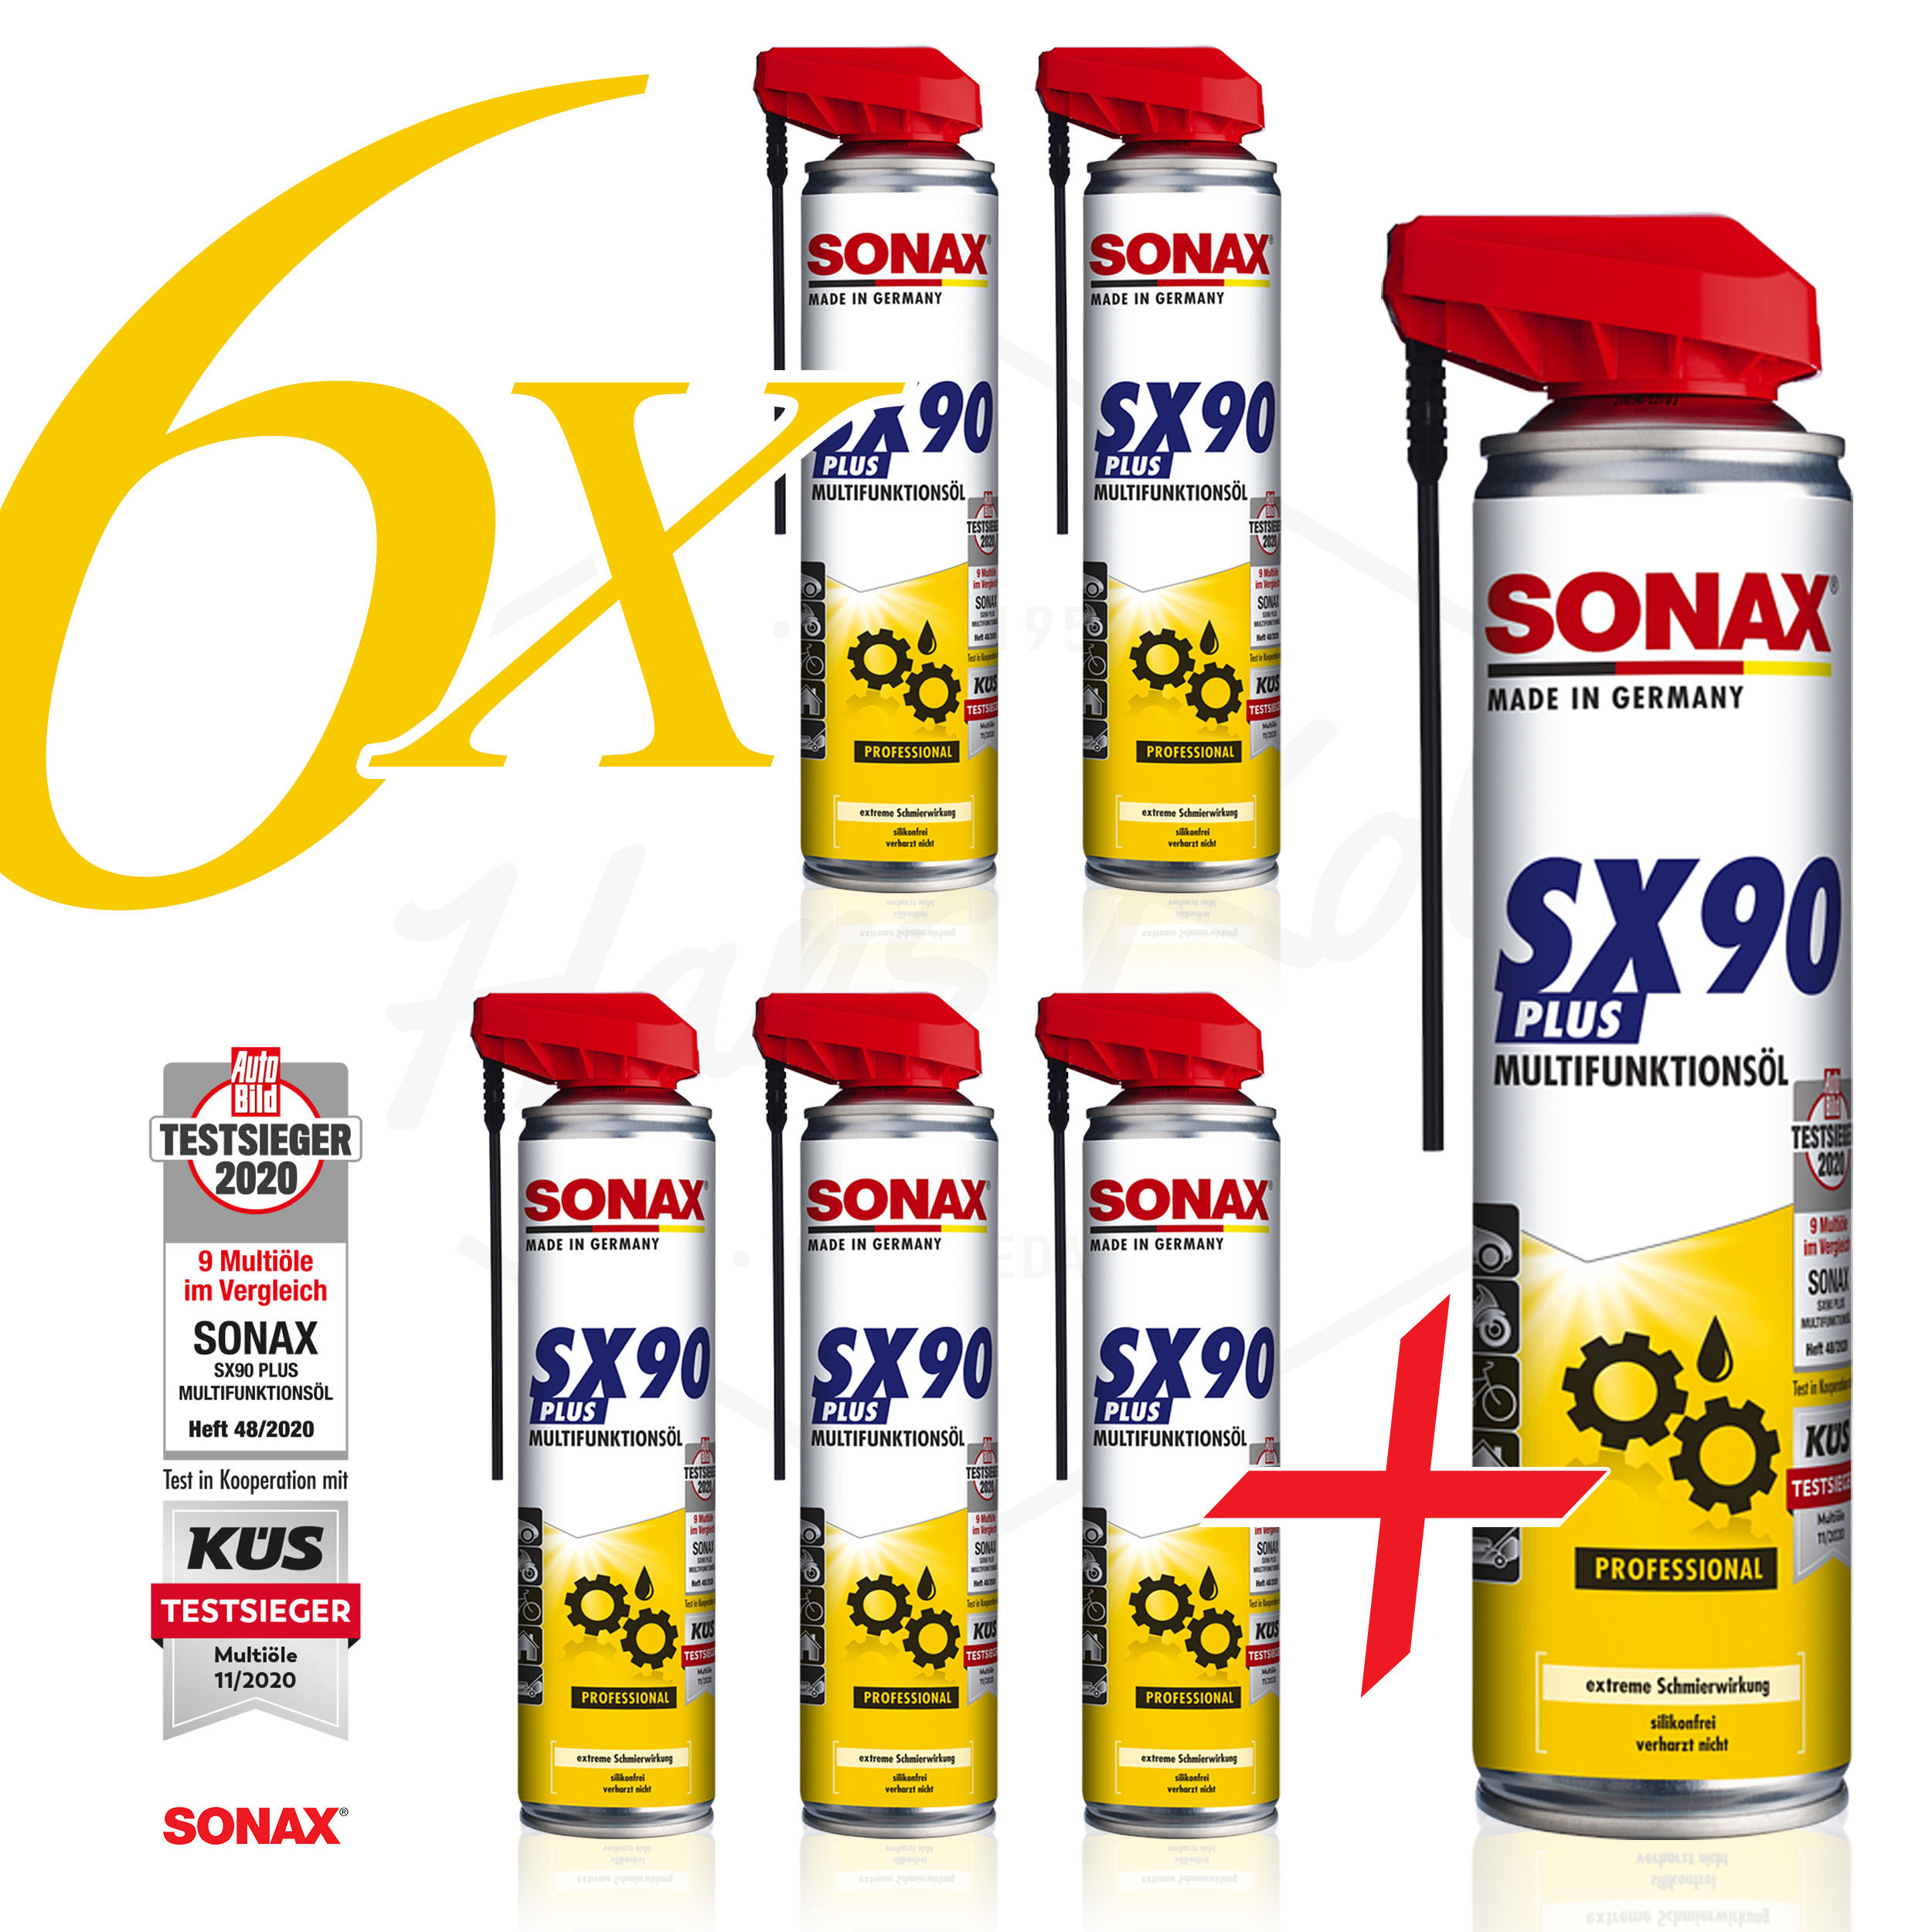 SONAX Multifunktions Kriech- und Schmieröl